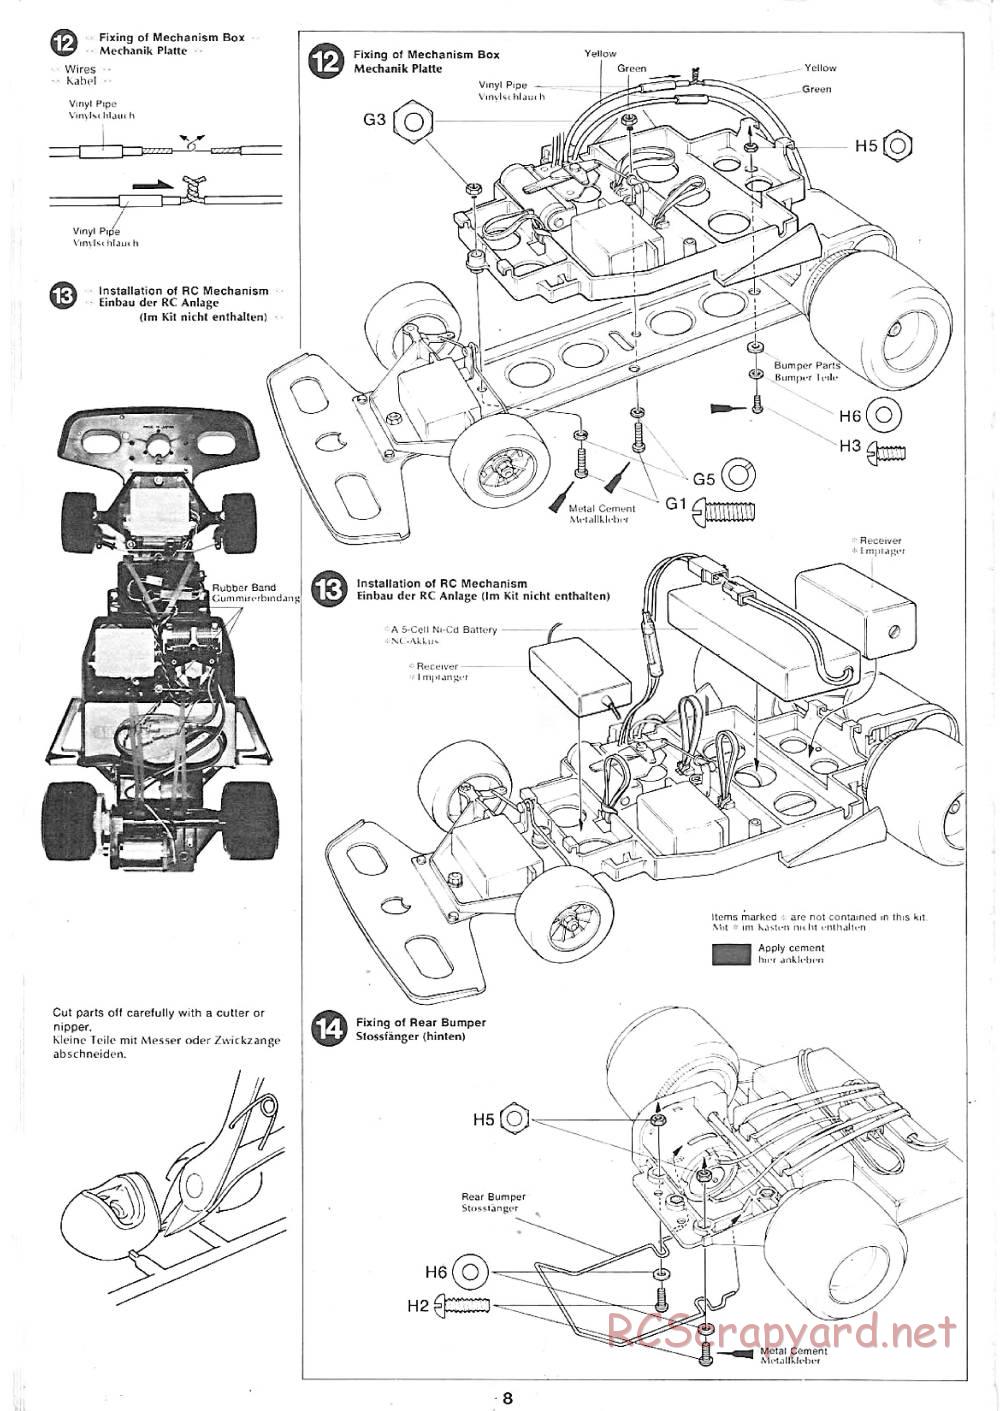 Tamiya - Martini Mk22 Renault (F2) - 58014 - Manual - Page 8